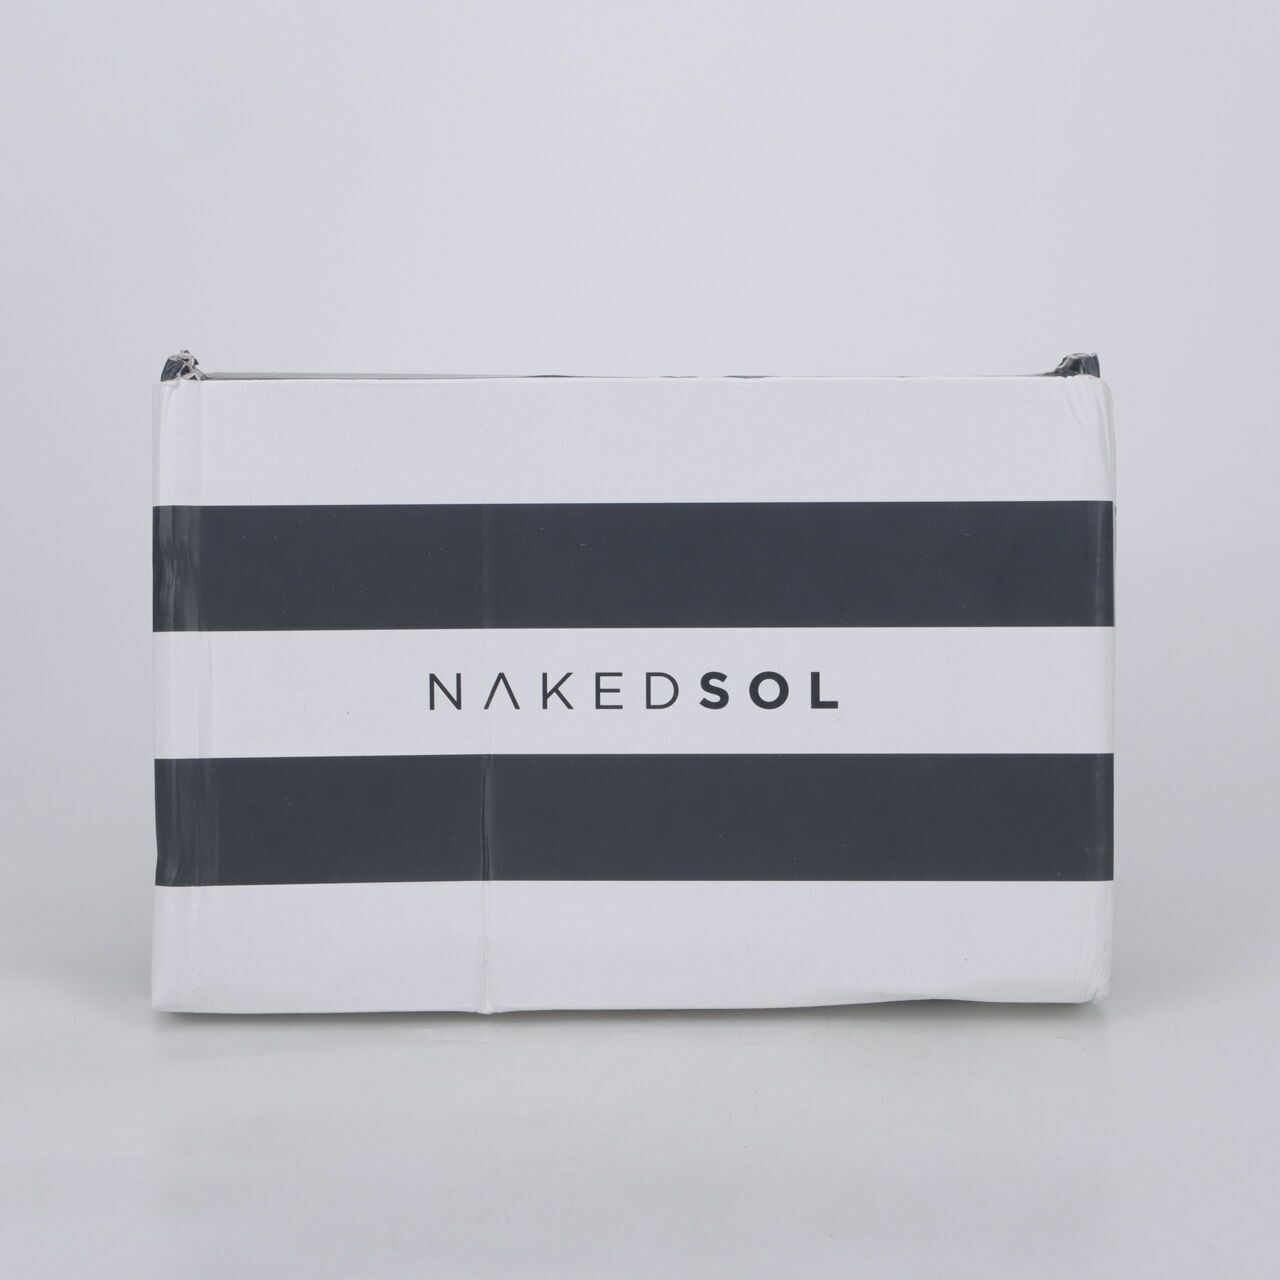 Naked Sol Sally Slides Tan Sandals